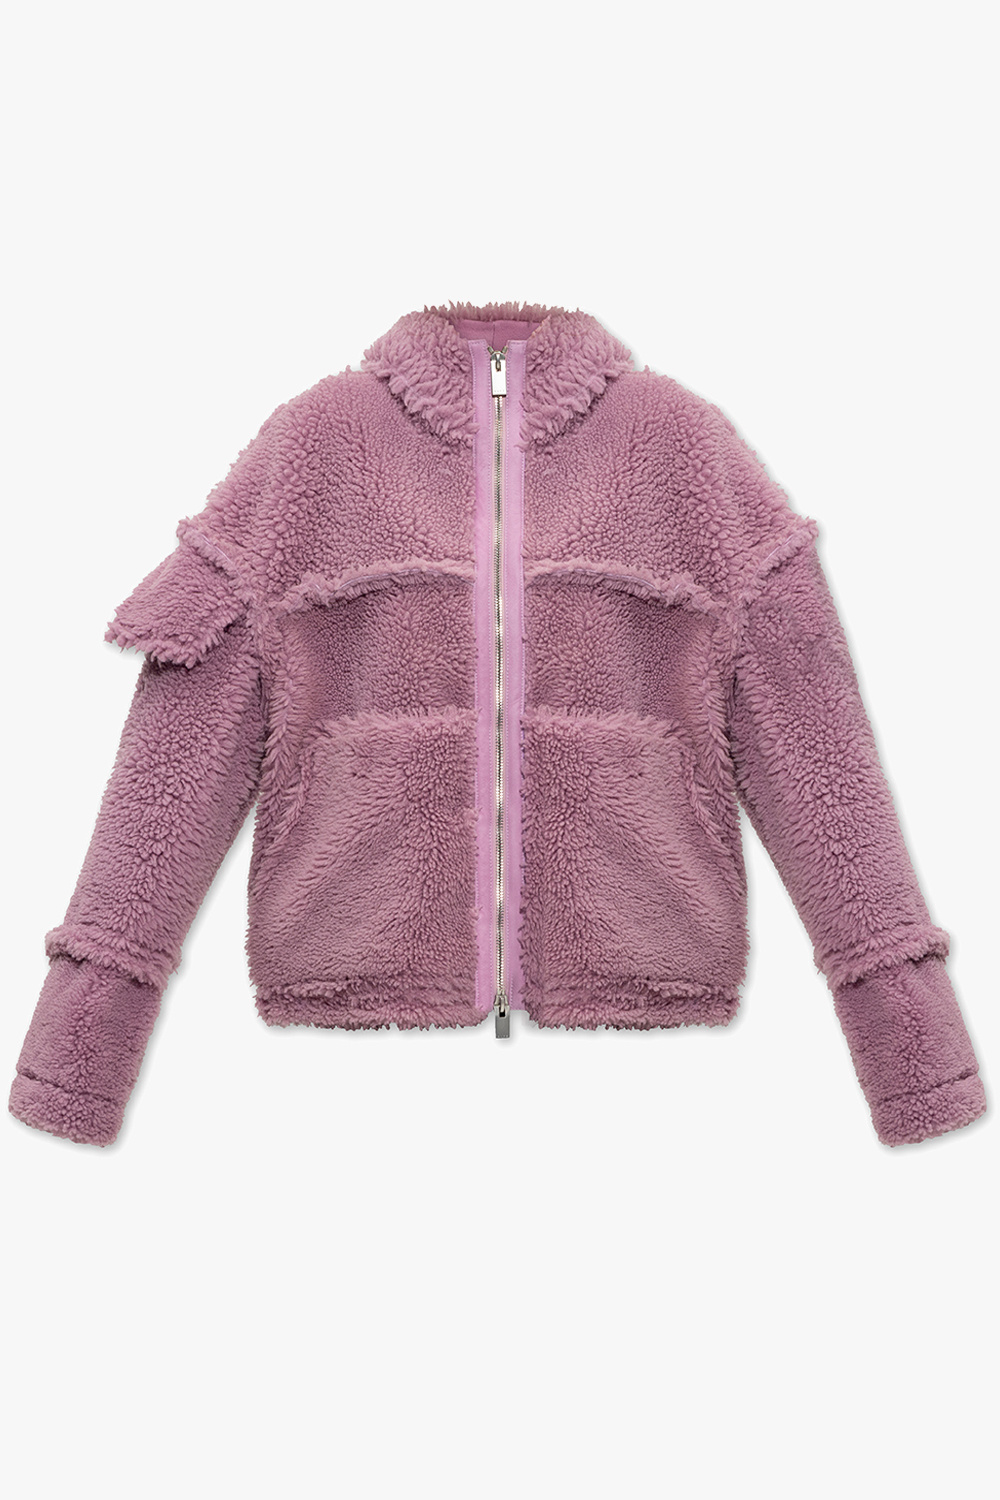 1017 ALYX 9SM Hooded shearling jacket | Women's Clothing | Vitkac